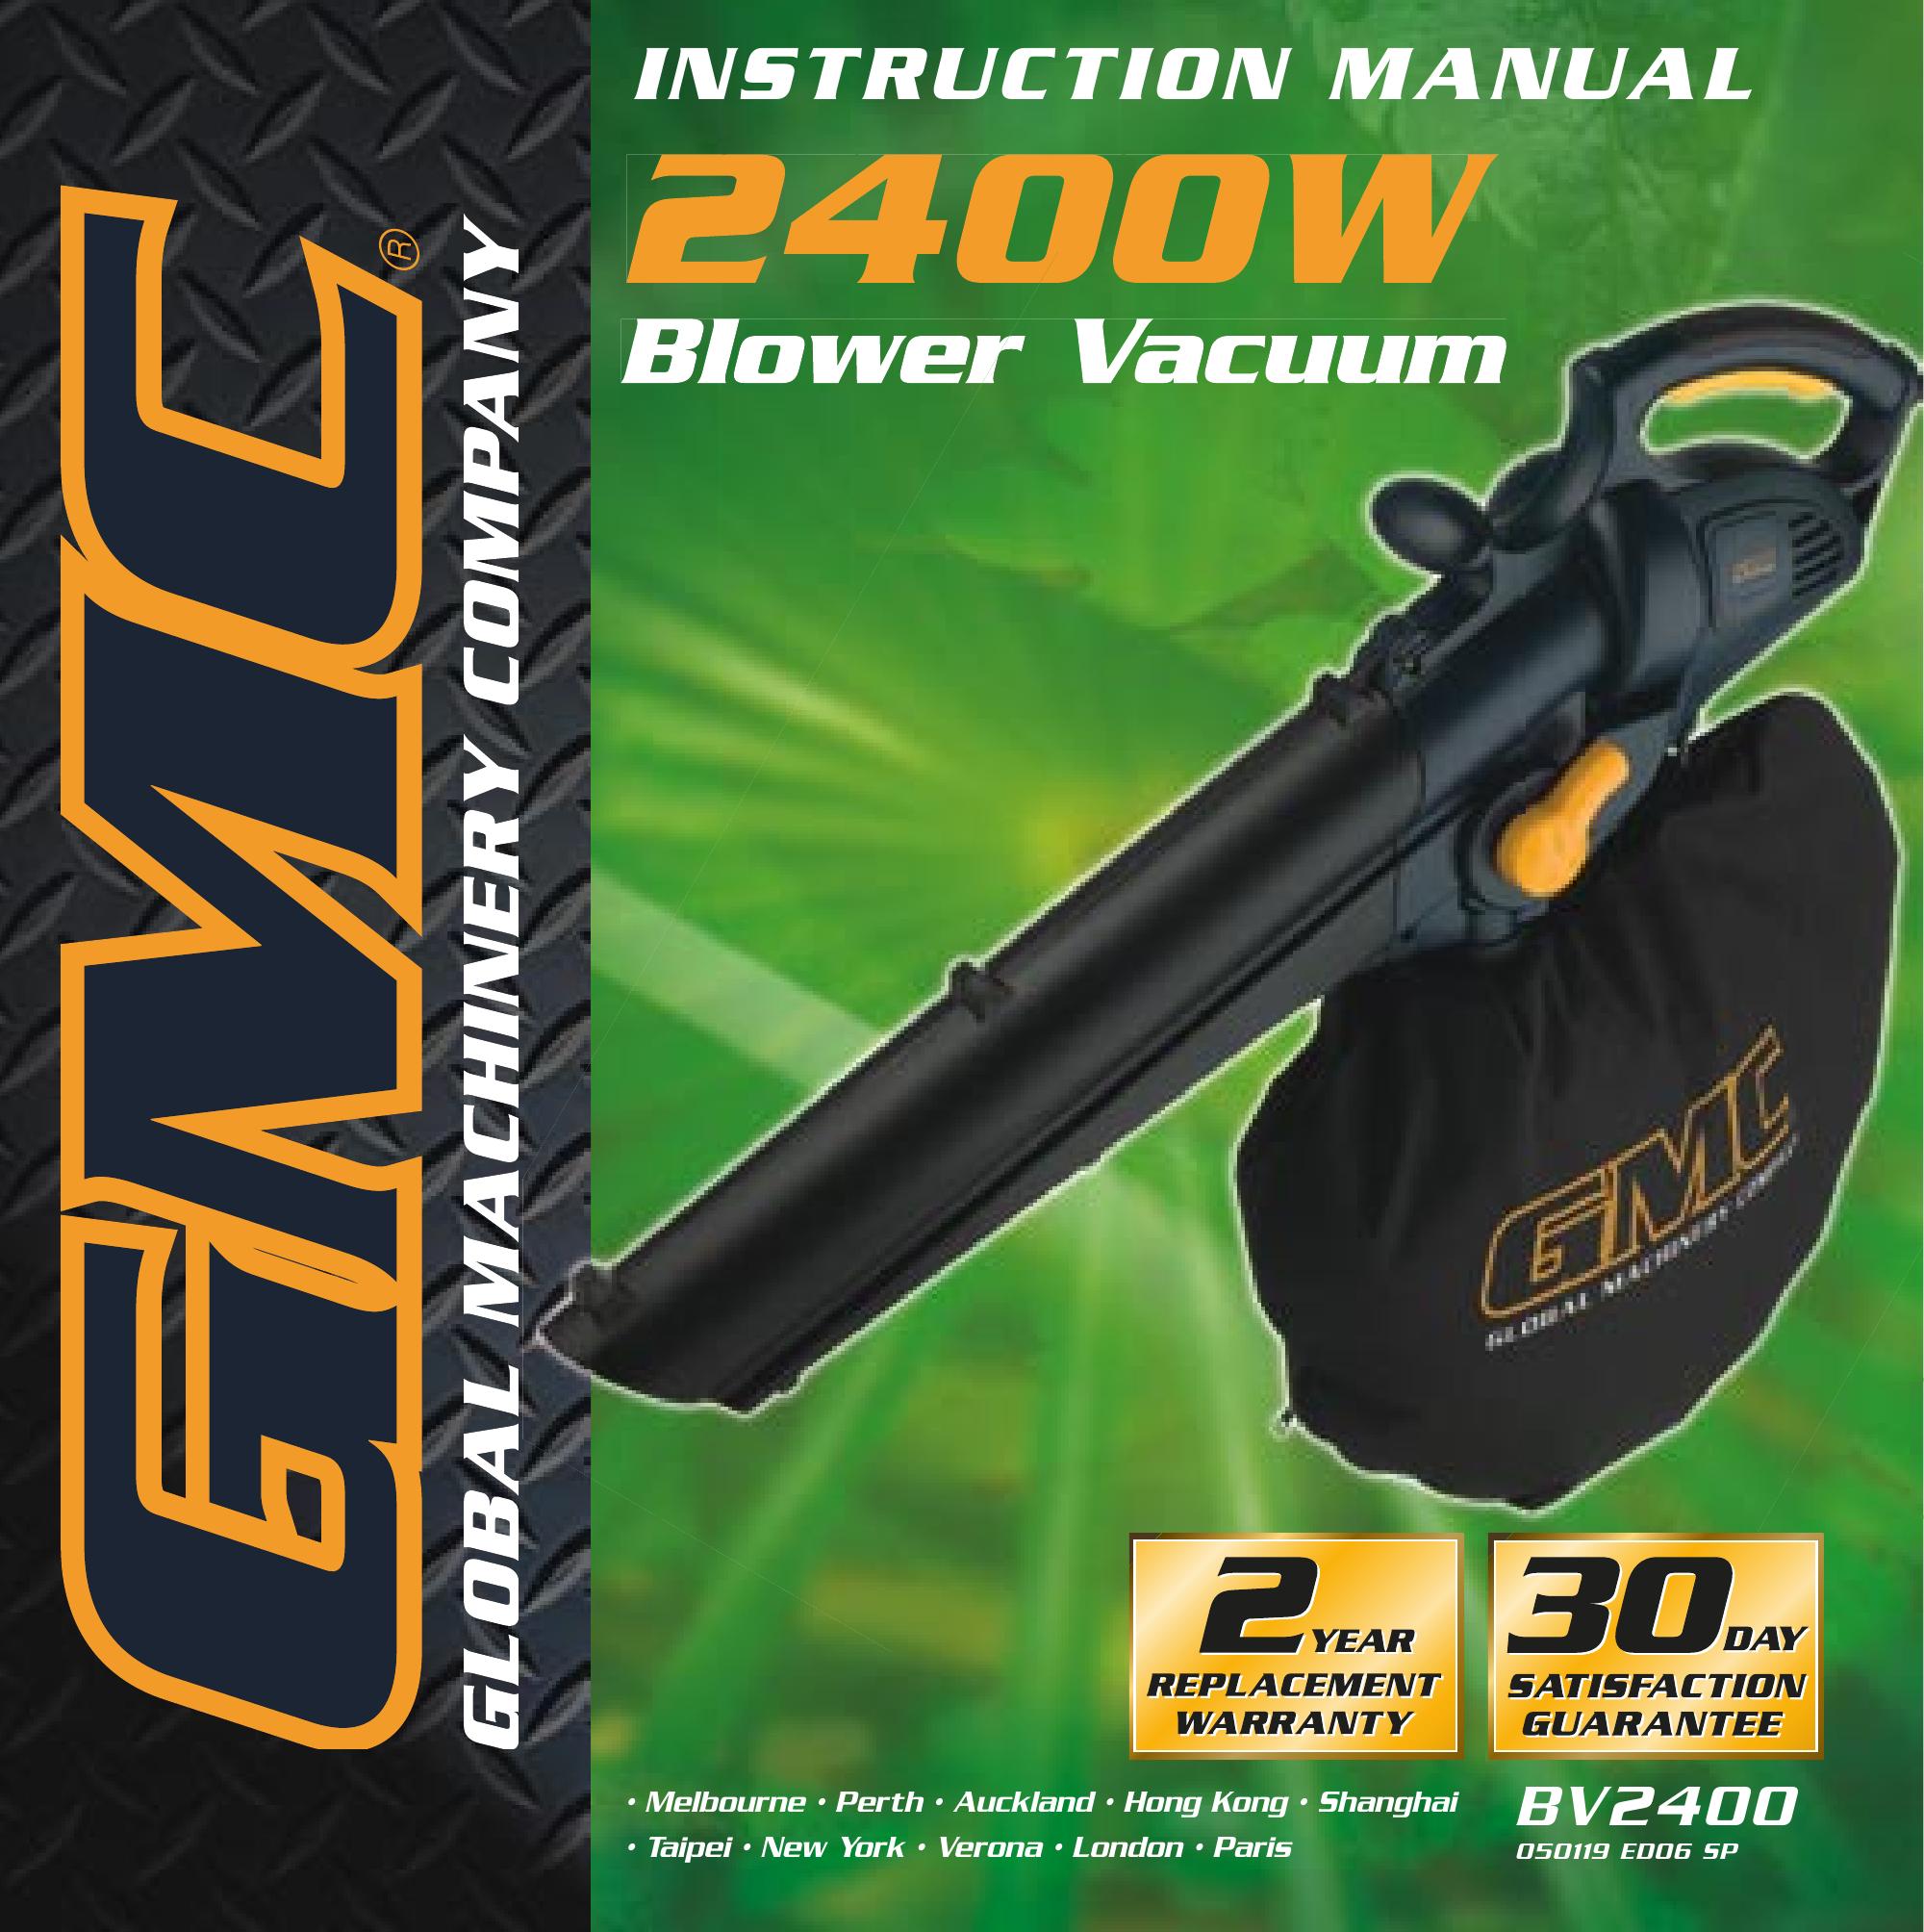 Global Machinery Company BV2400 Blower User Manual